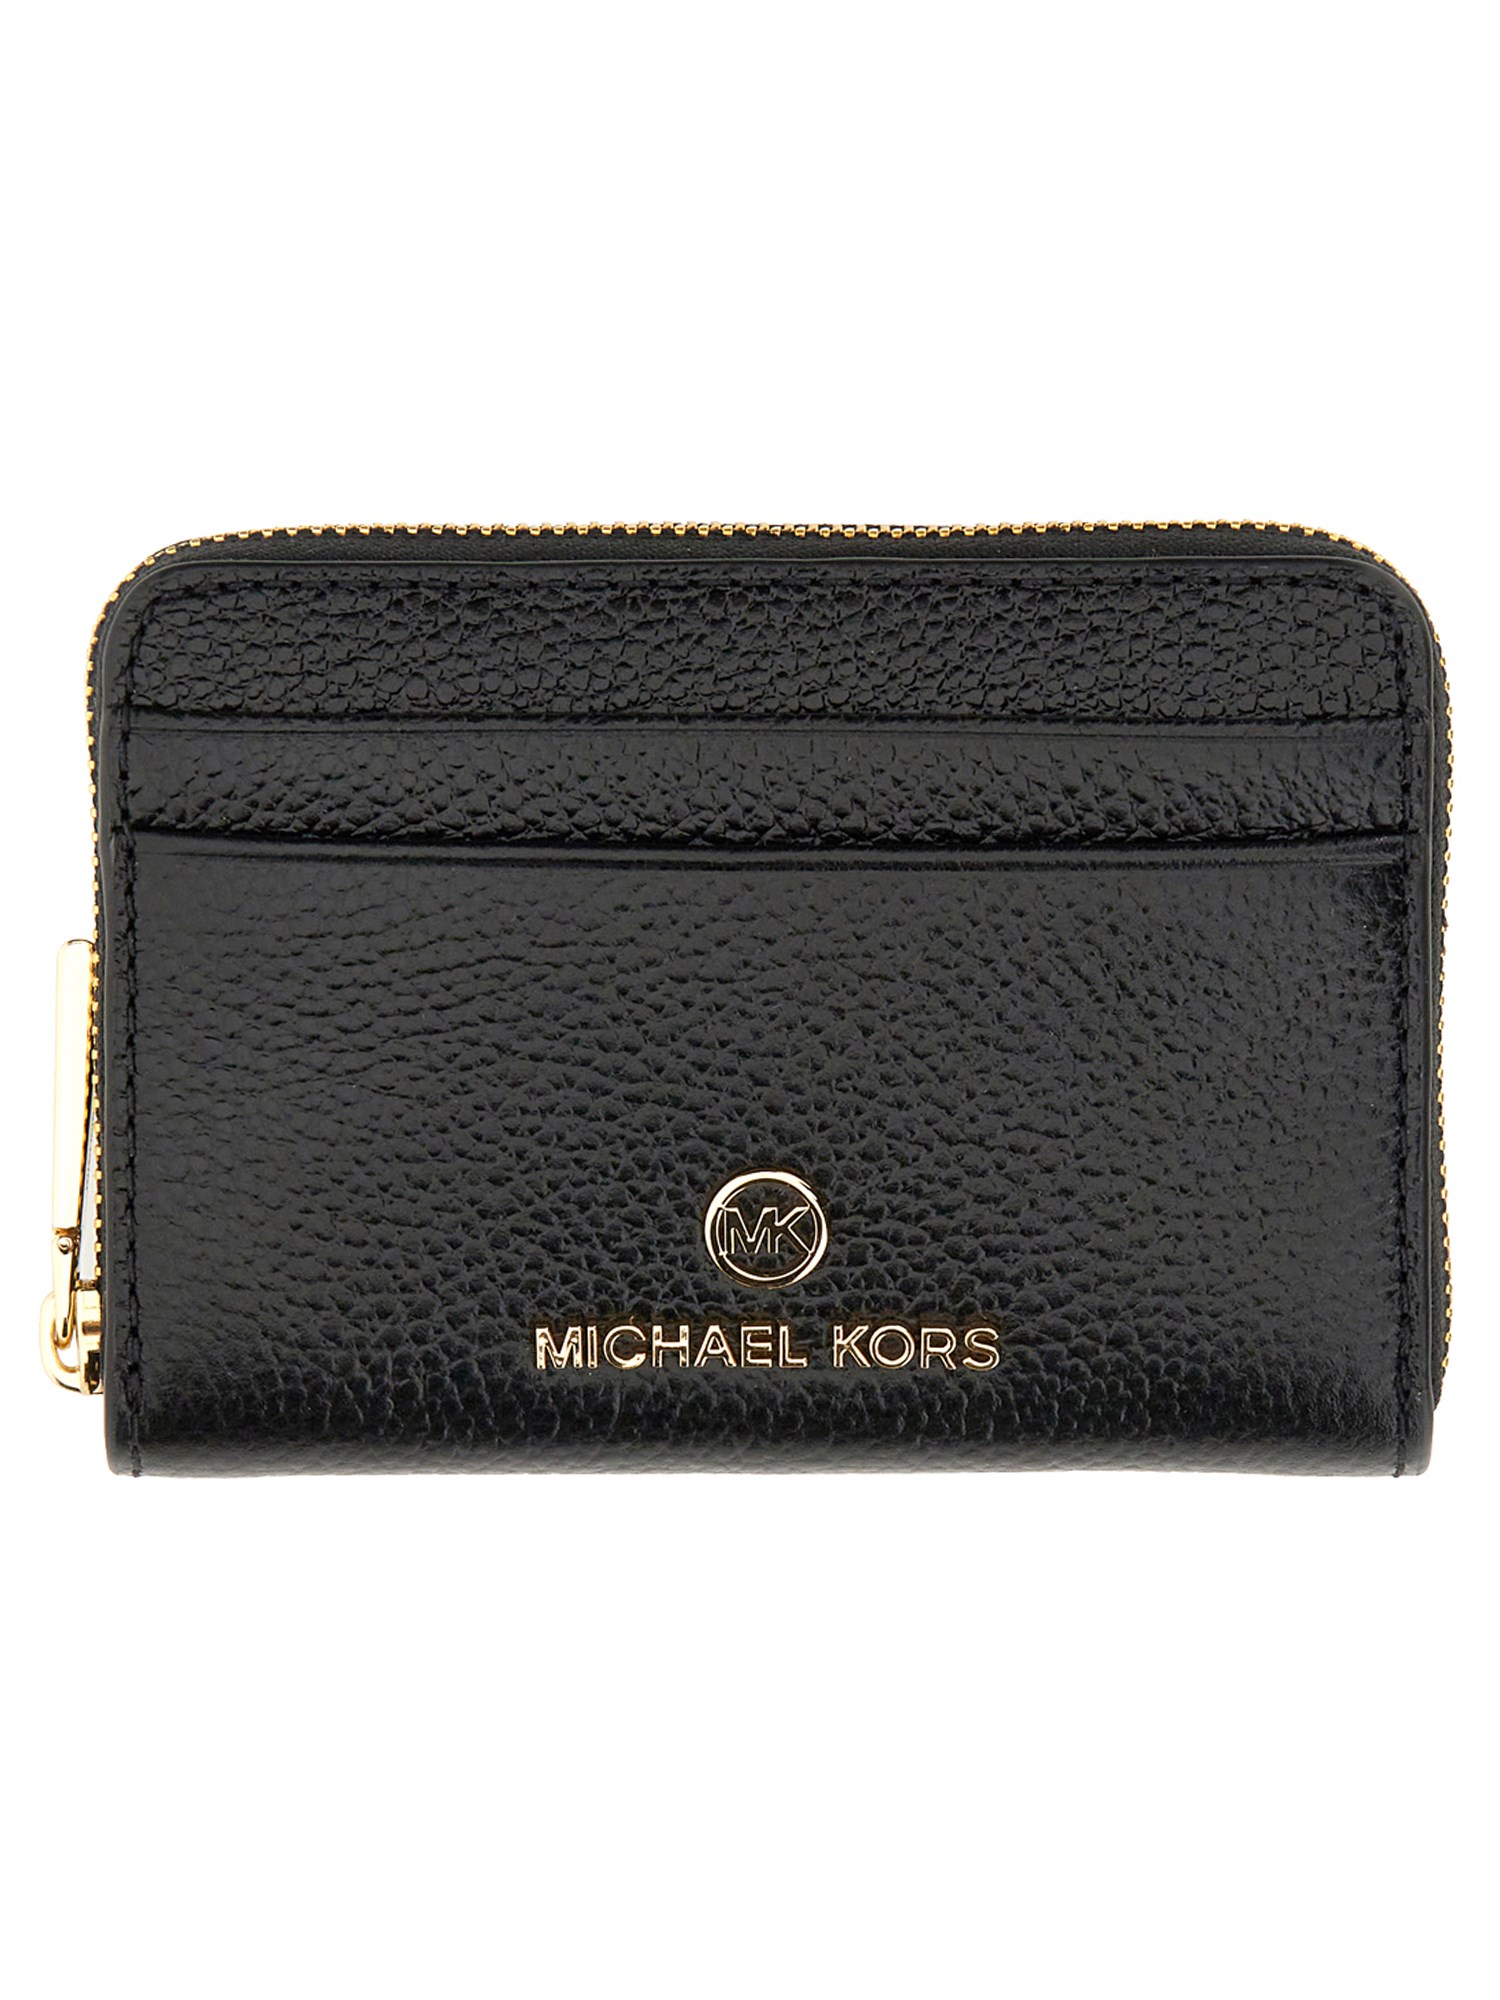 michael by michael kors jet set charm wallet